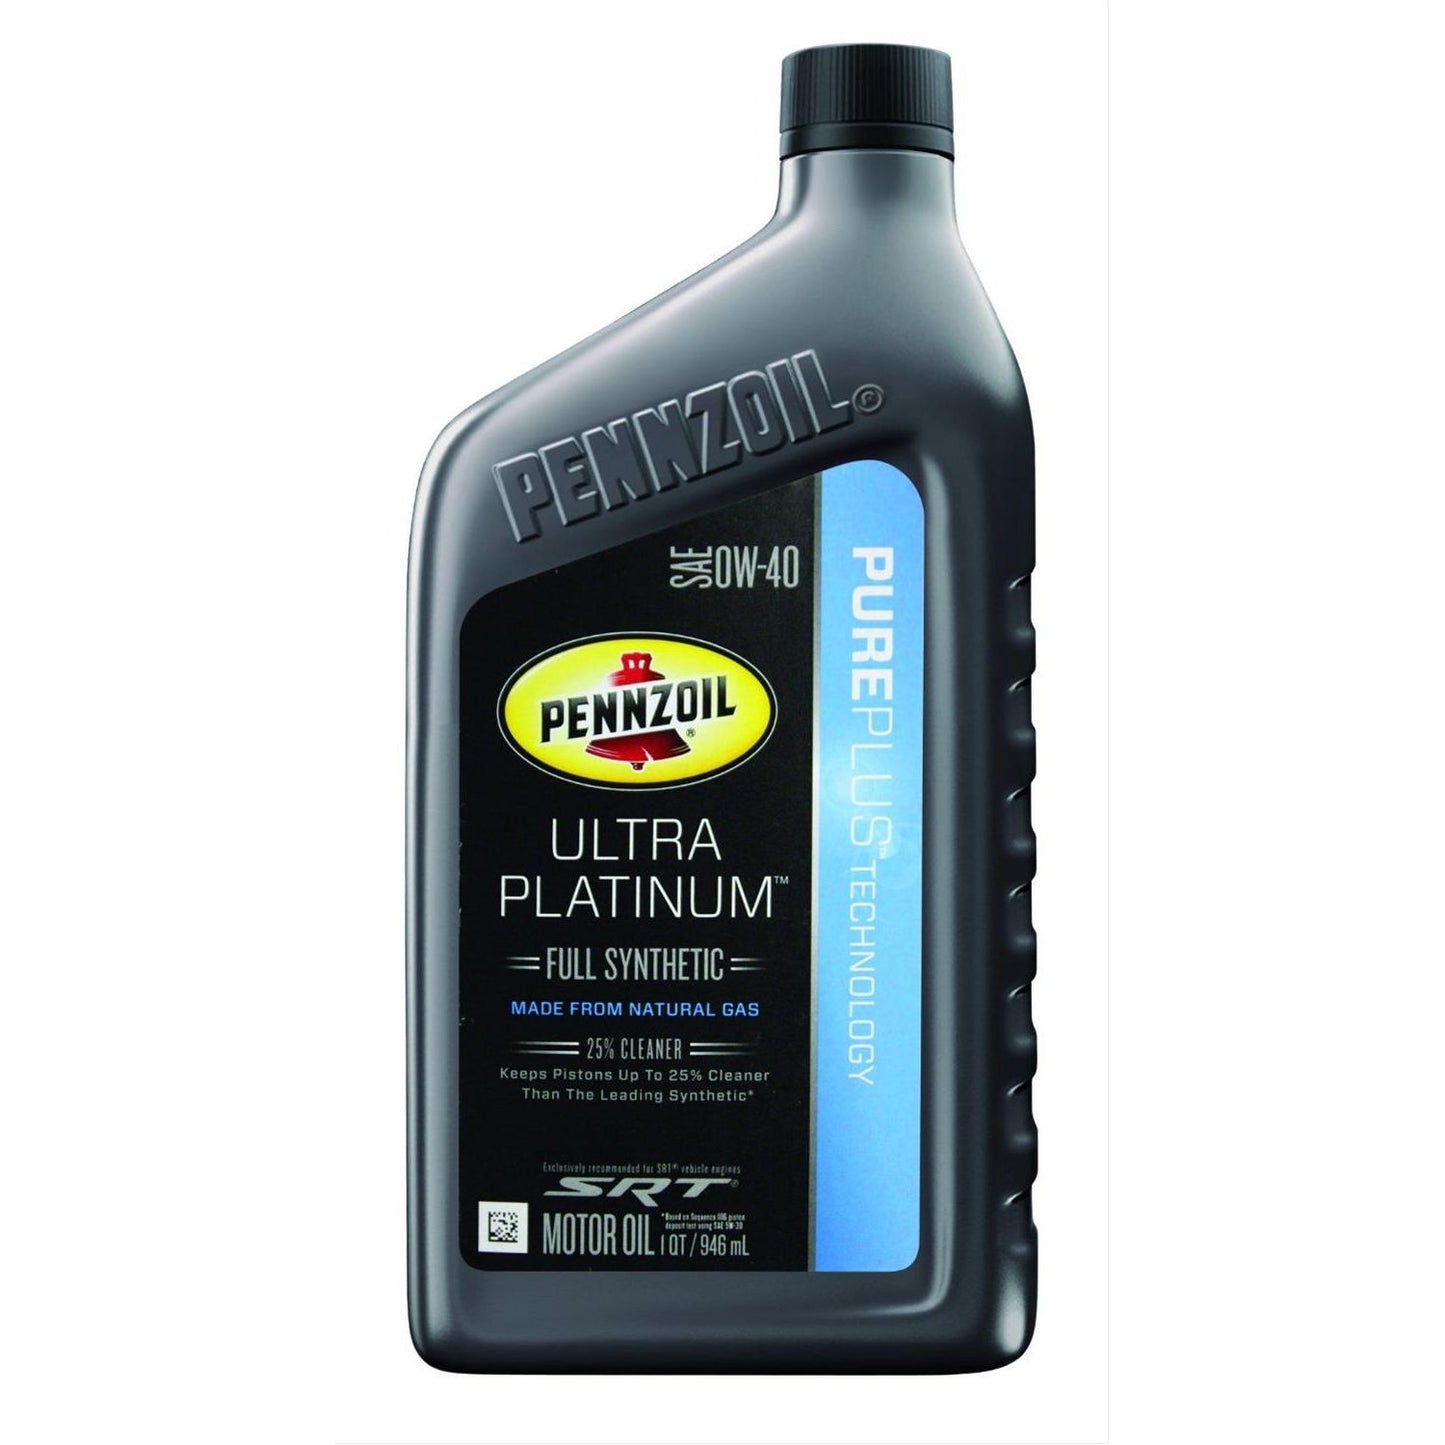 Pennzoil Ultra Platinum with PurePlus Technology 0W40